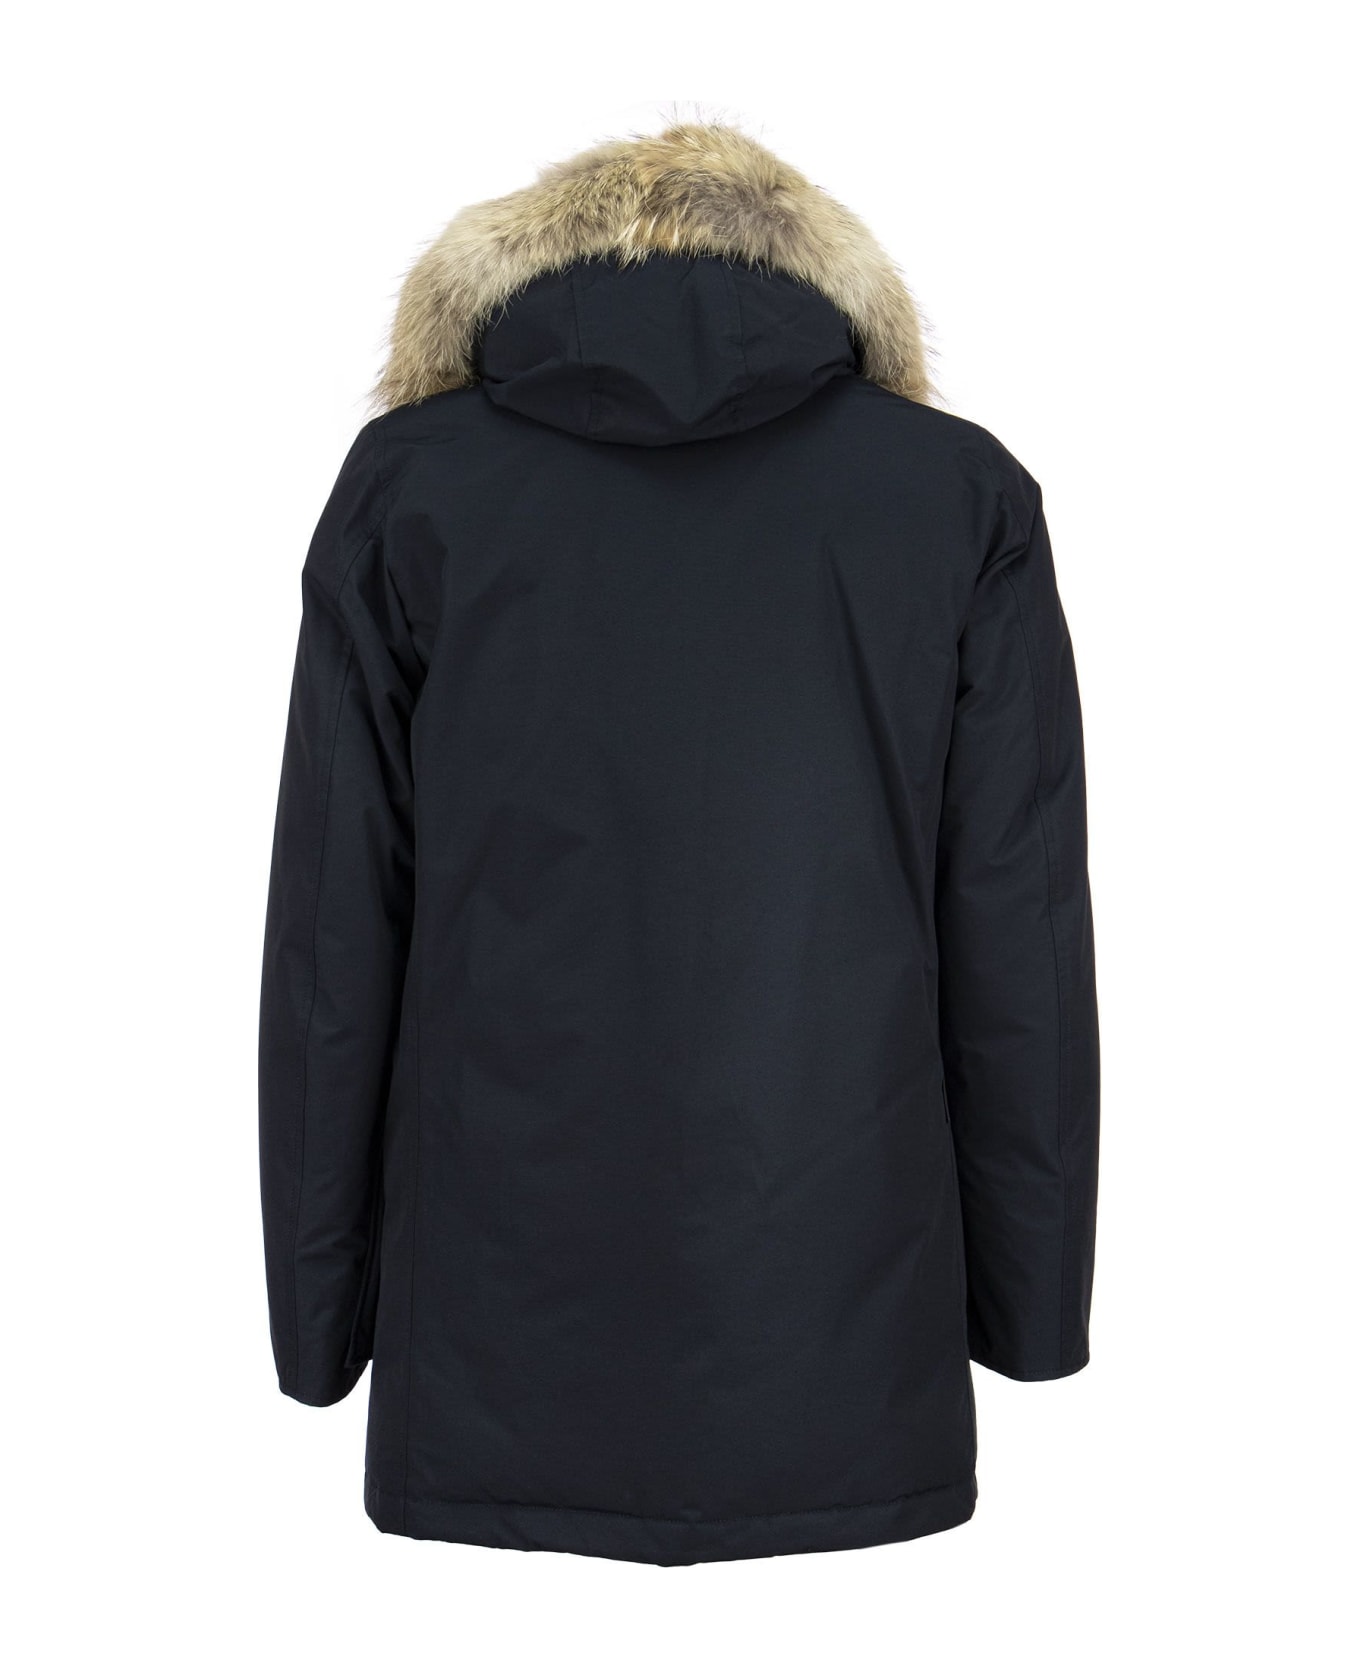 Woolrich Arctic Parka With Removable Fur Coat - Melton blue